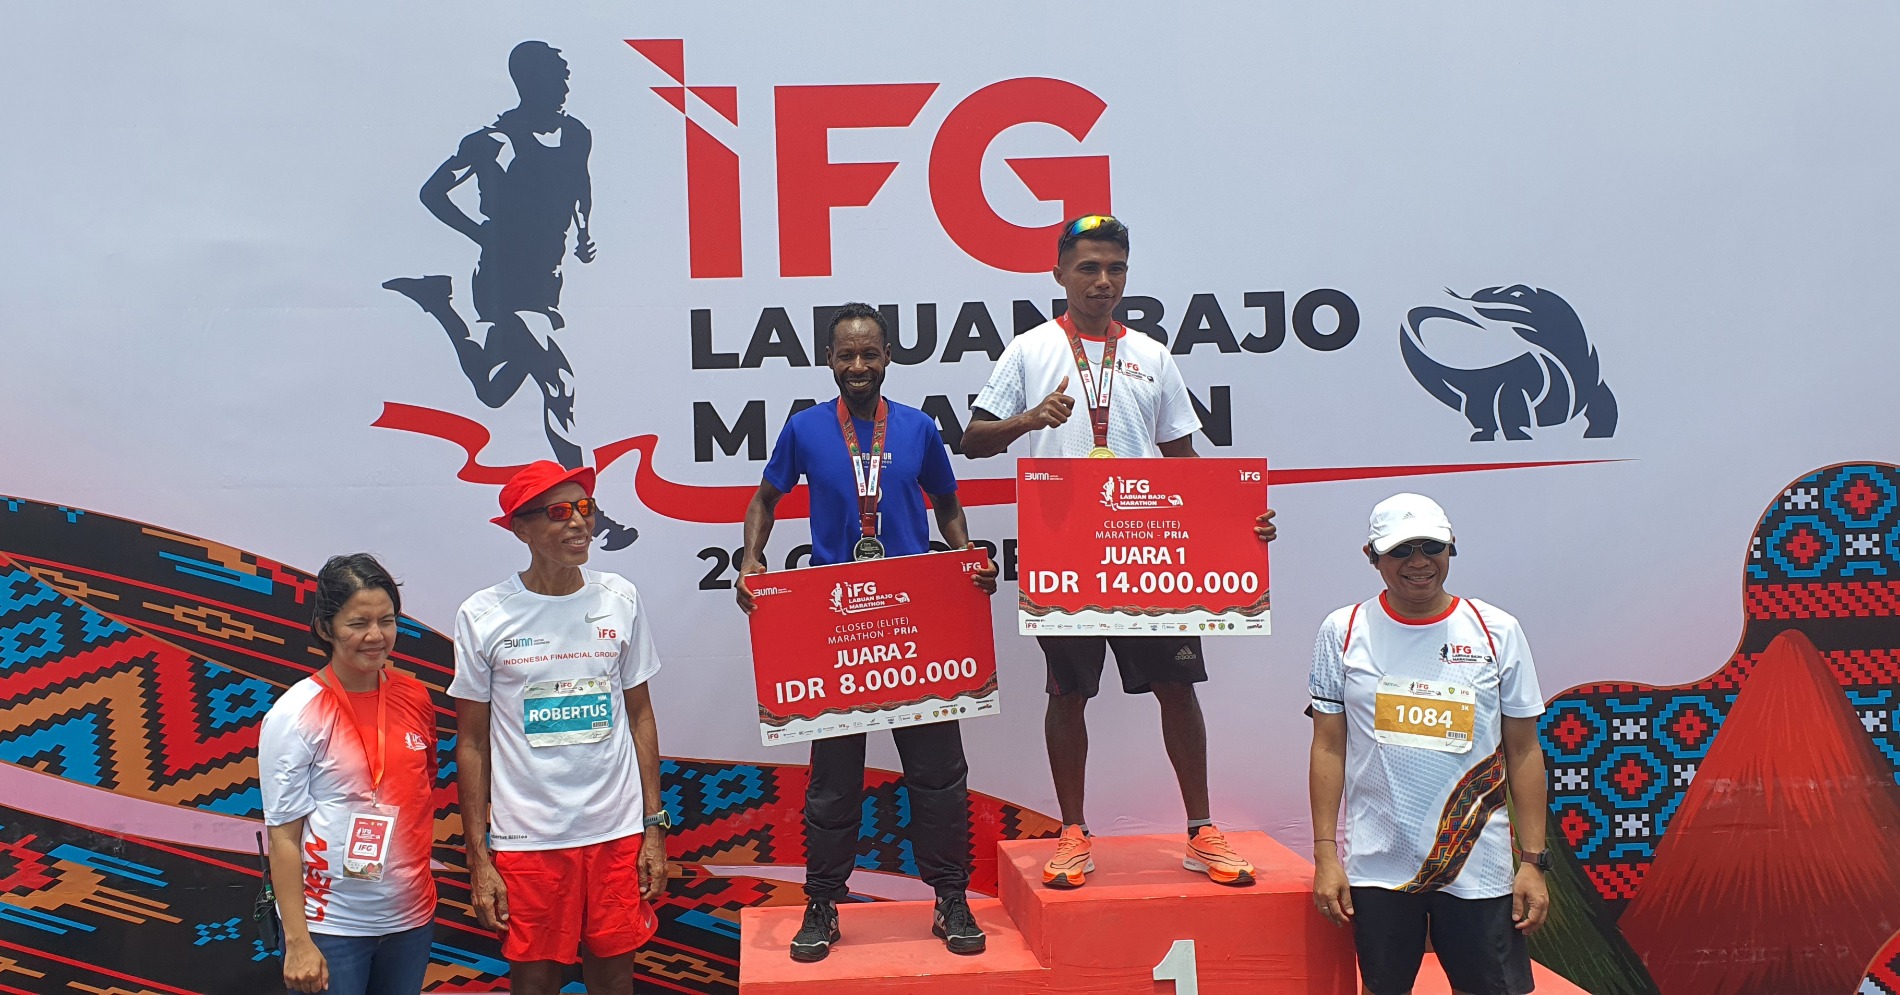 Difta Ibrula Unbanu menjuarai kategori Male Elite IFG Labuan Bajo Marathon 2022 dengan catatan waktu 3 jam 9 menit 11 detik. (Sumber gambar: IFG Labuan Bajo Marathon)